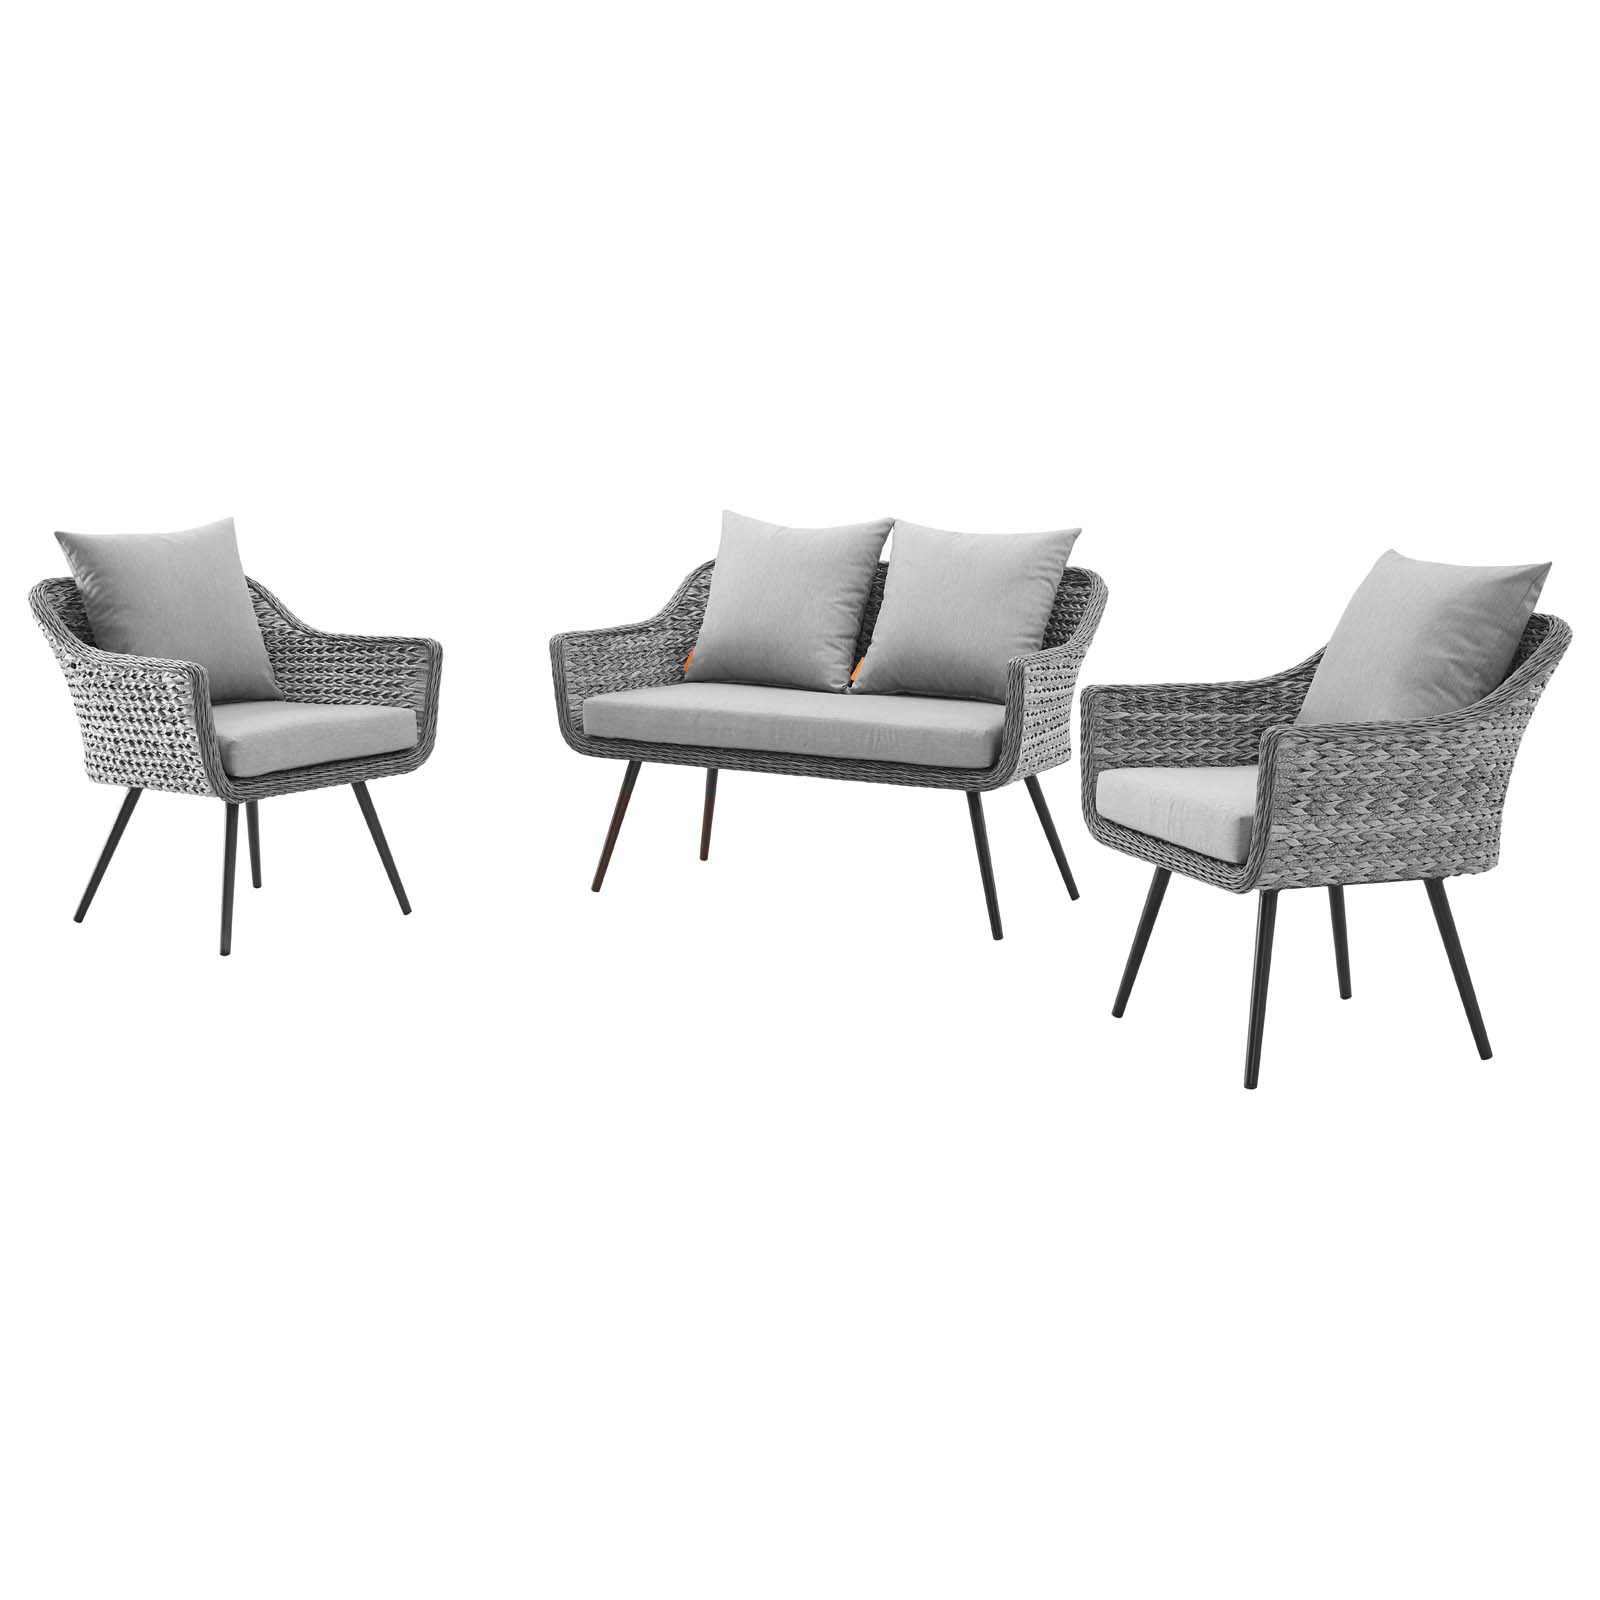 Contemporary Modern Urban Designer Outdoor Patio Balcony Garden Furniture Lounge Sofa and Chair Set, Aluminum Fabric Wicker Rattan, Grey Gray - image 1 of 8